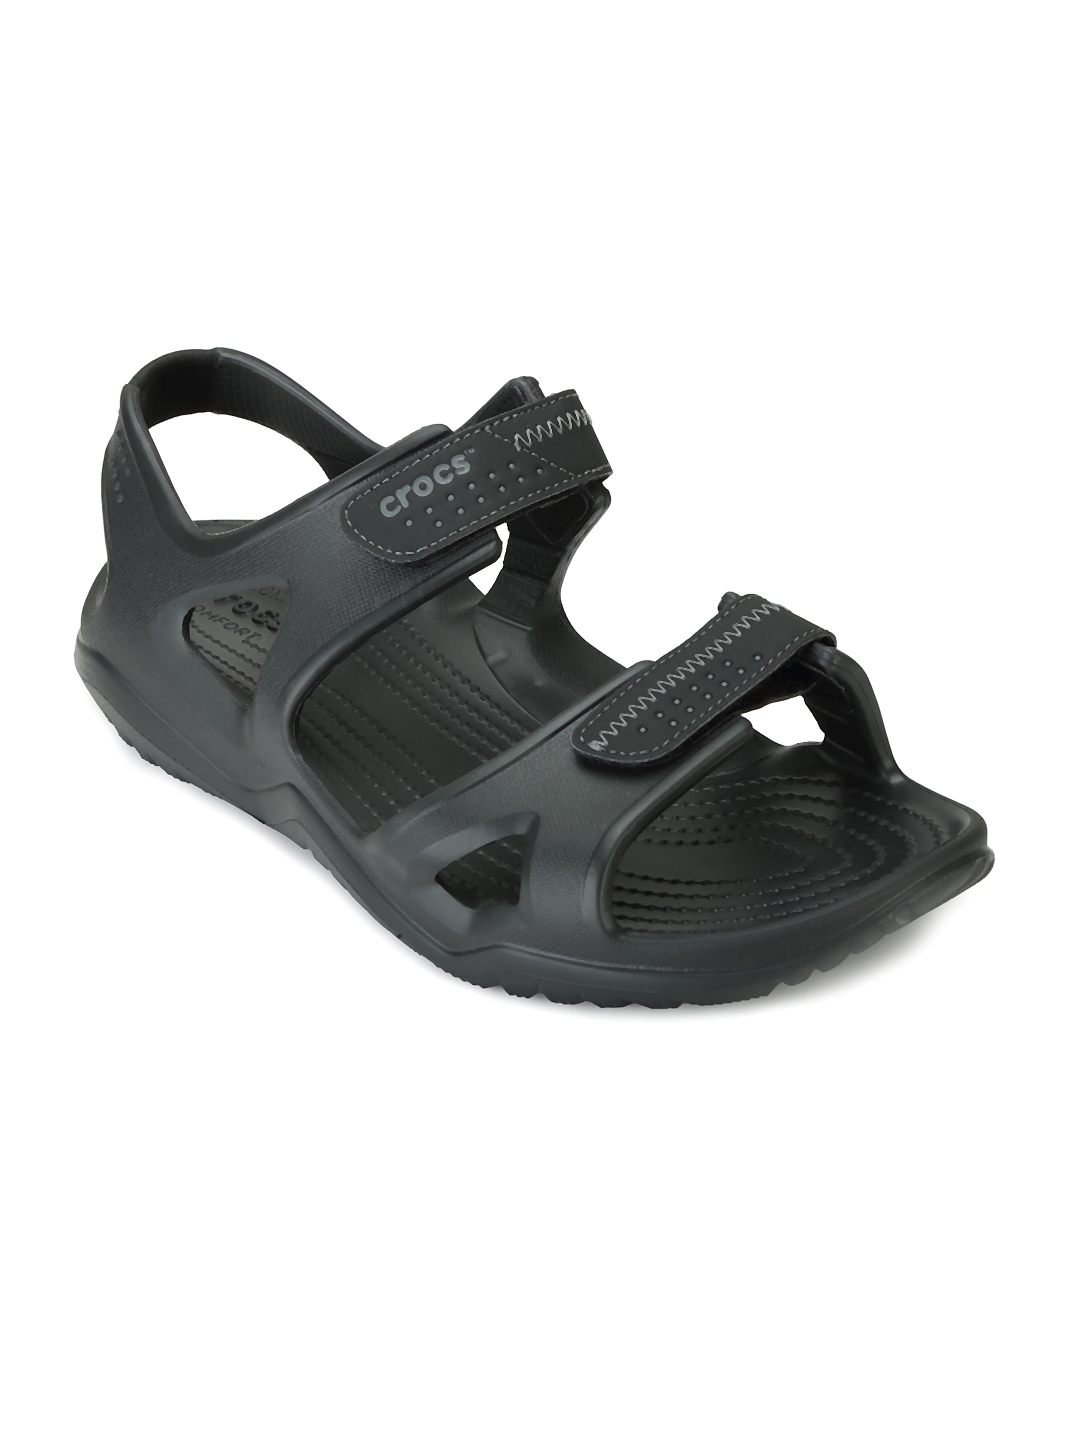 Buy Crocs Swiftwater Men Black Sports Sandals - Sports Sandals for Men ...